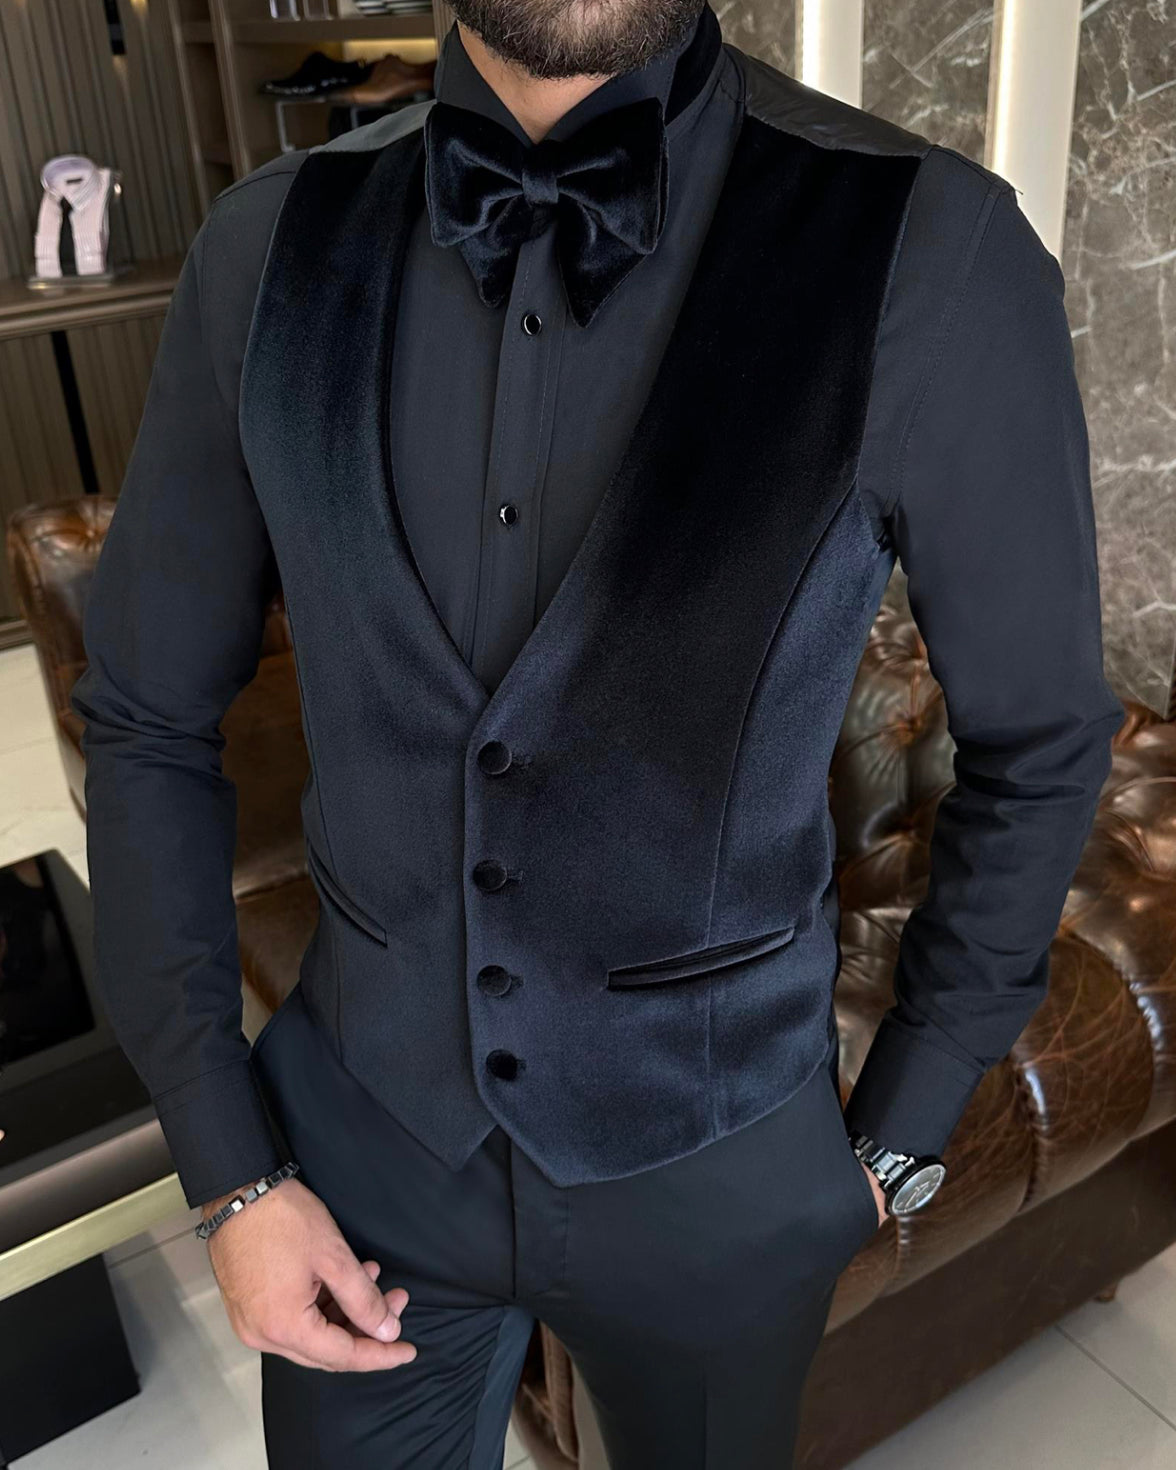 Bojoni Richbaum Royal Black  Slim Fit Tuxedo Suit